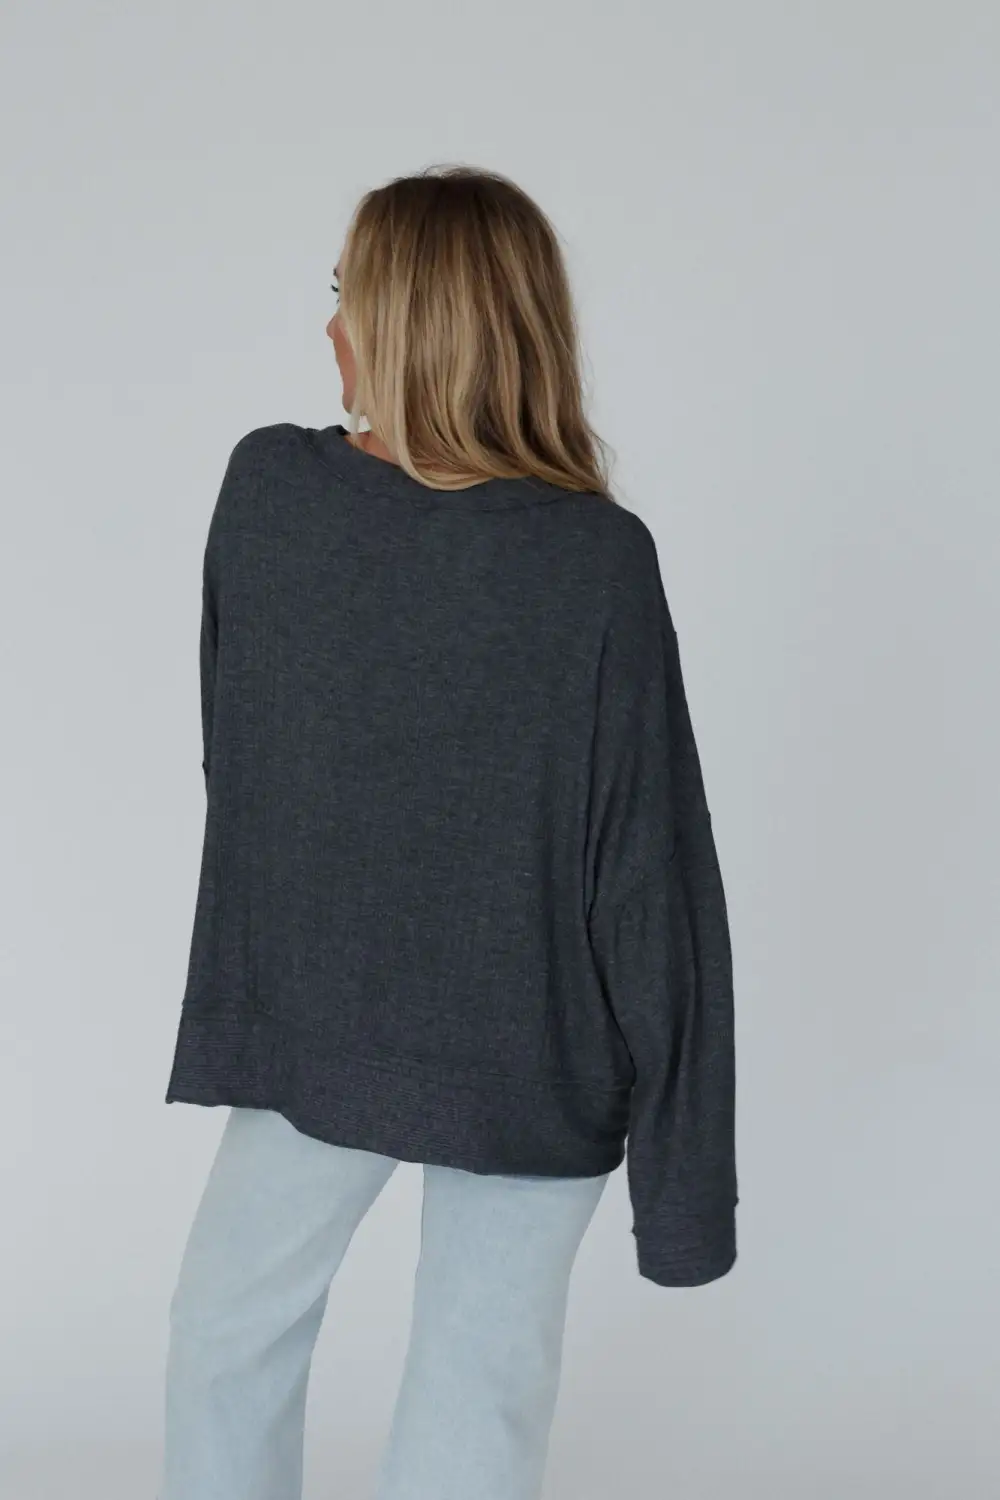 Soul Rhythm Sweater Top - Charcoal